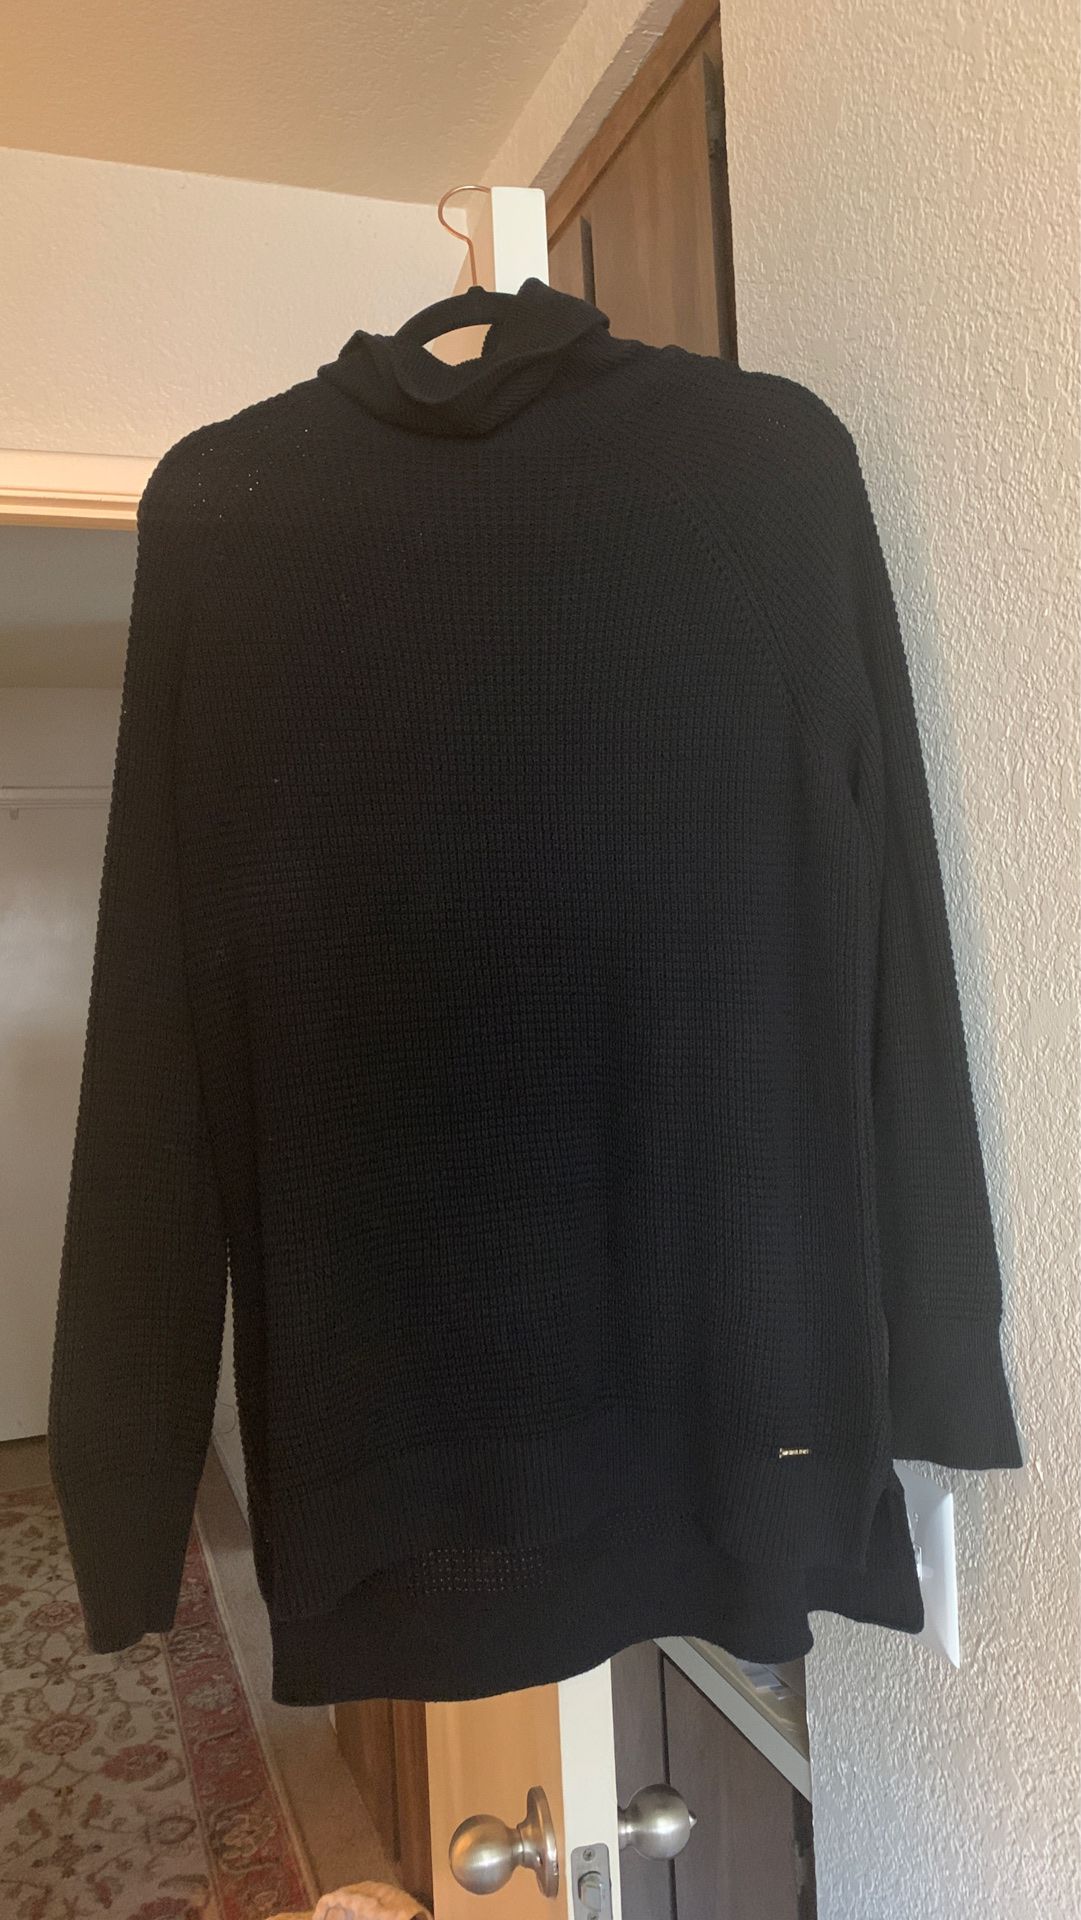 Michael Kors black turtleneck sweater